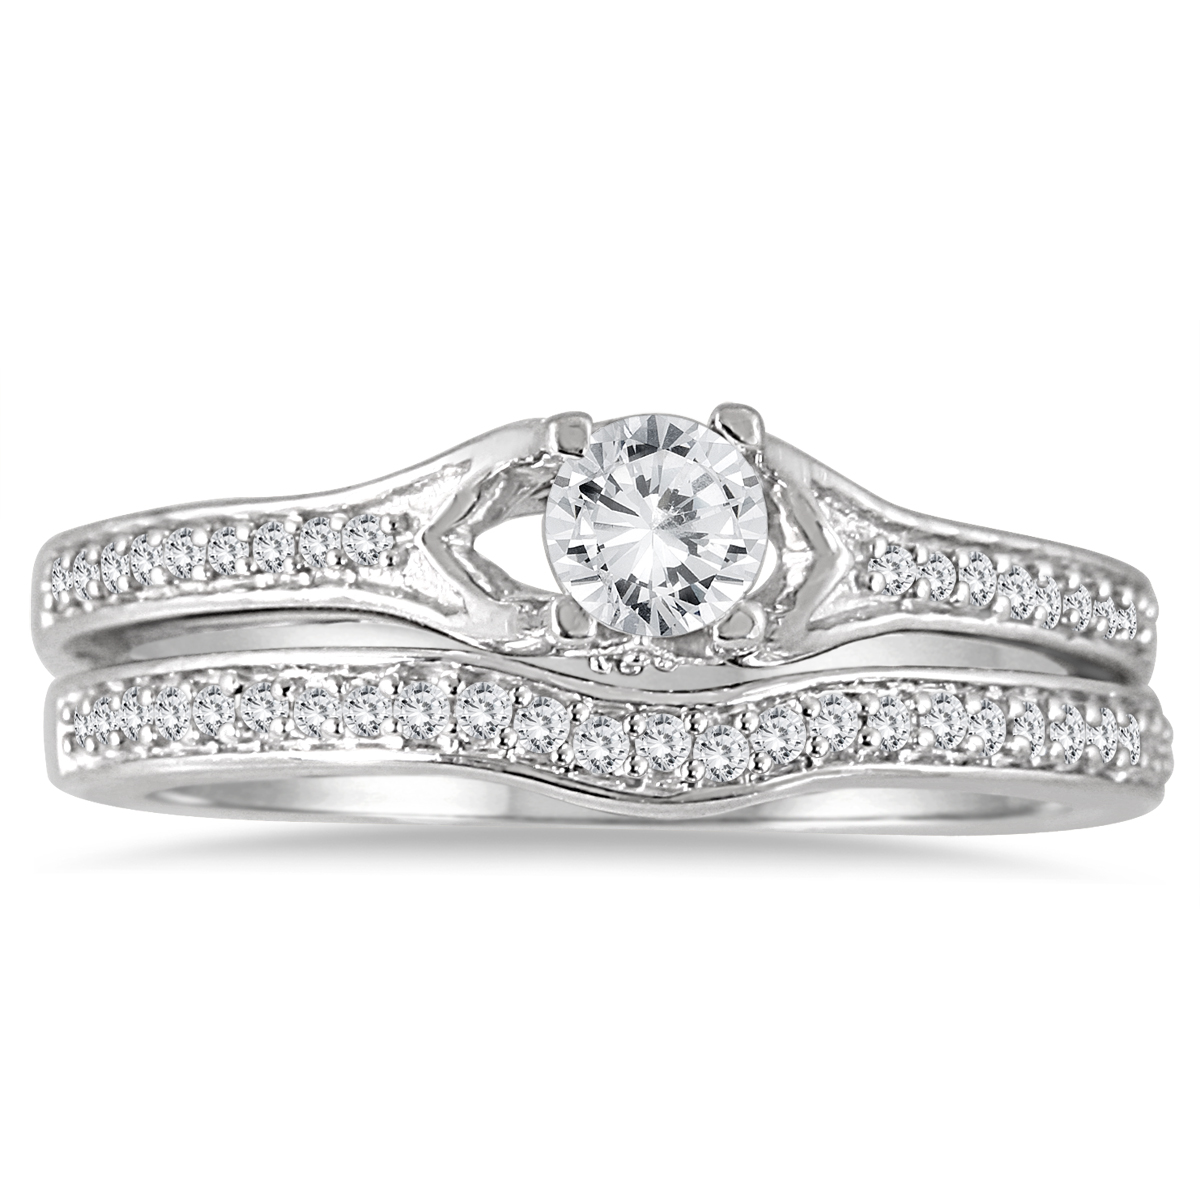 1/2 Carat TW Diamond Bridal Set in 14K White Gold